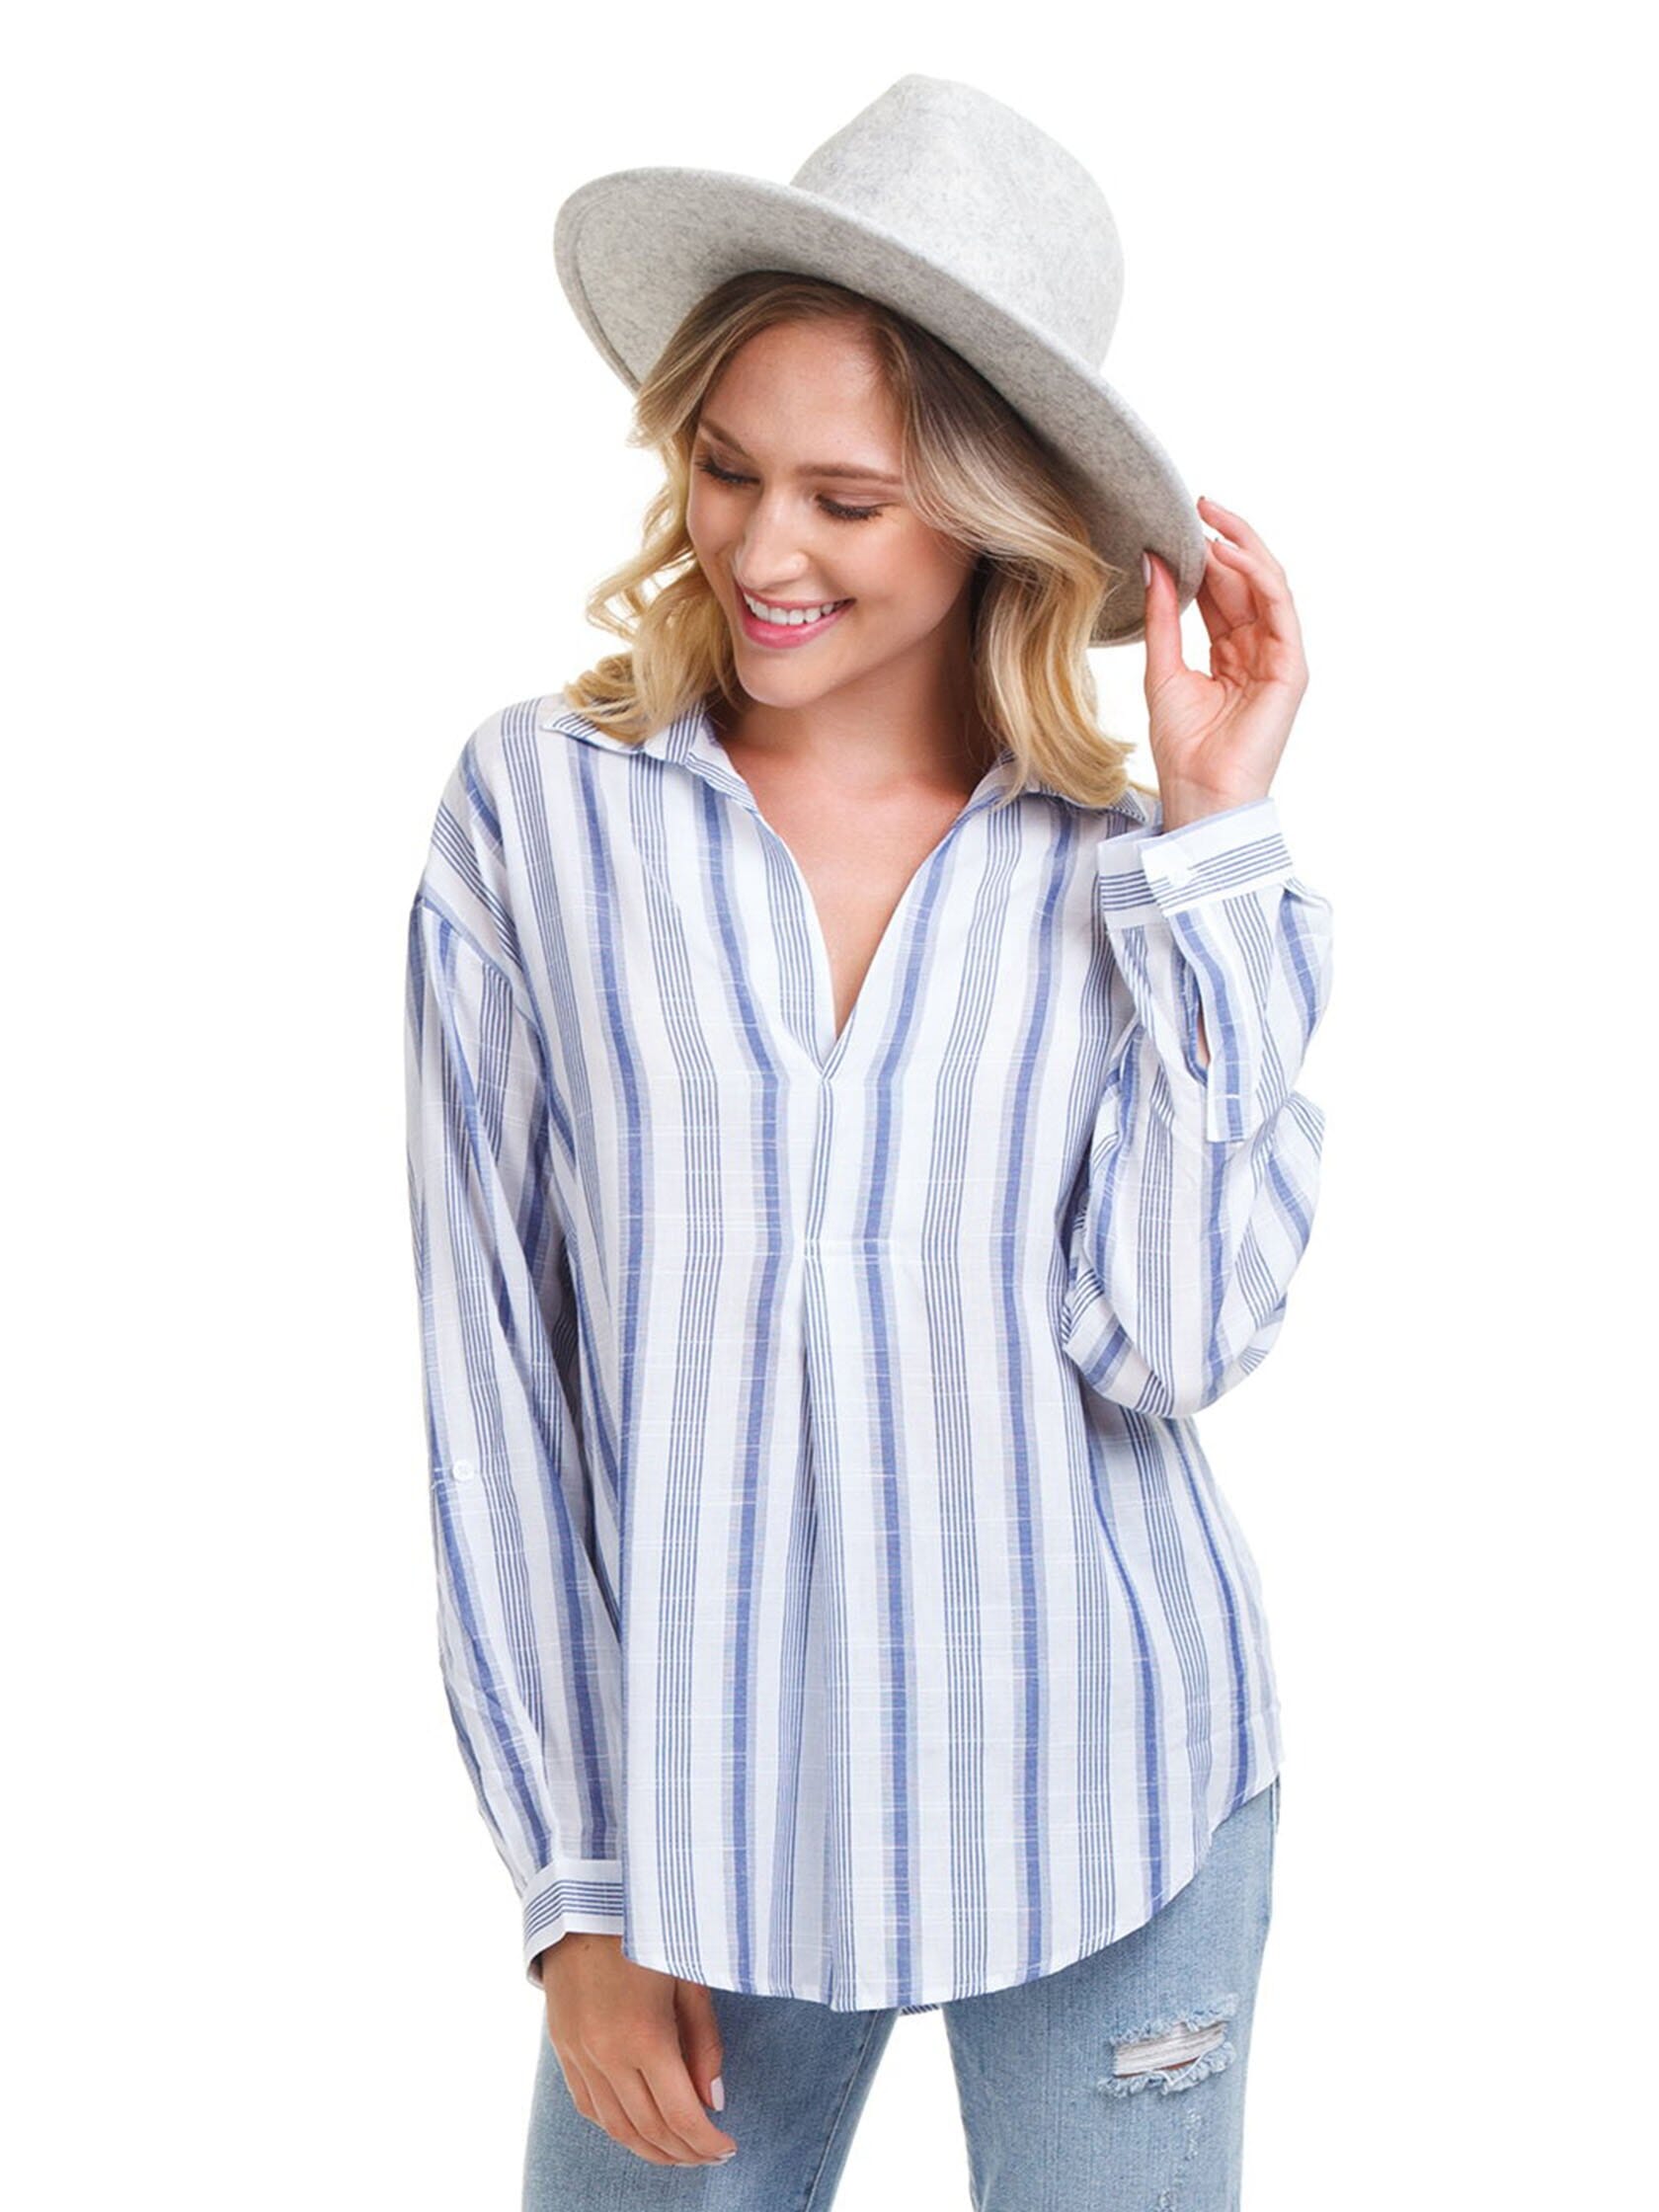 FashionPass Striped Popover Shirt in Blue/White